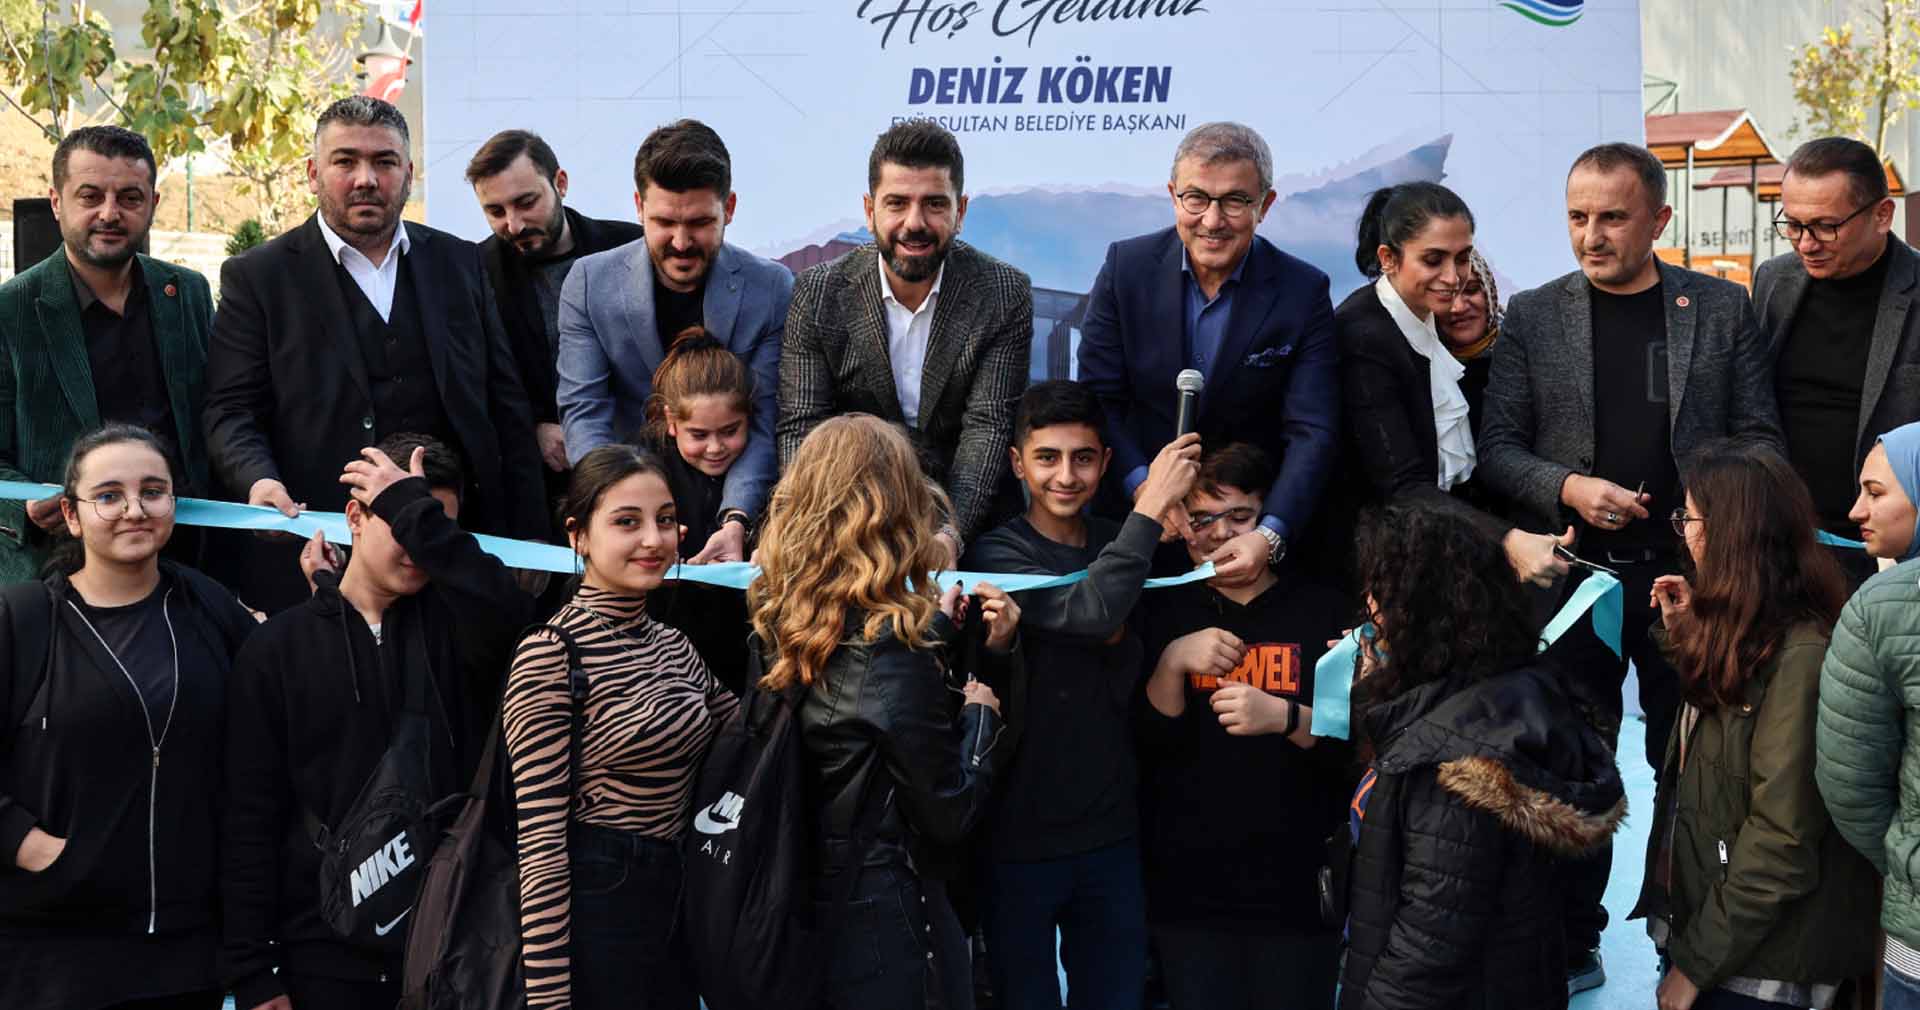 Mehmet Akif Ersoy Kültür Merkezi açıldı